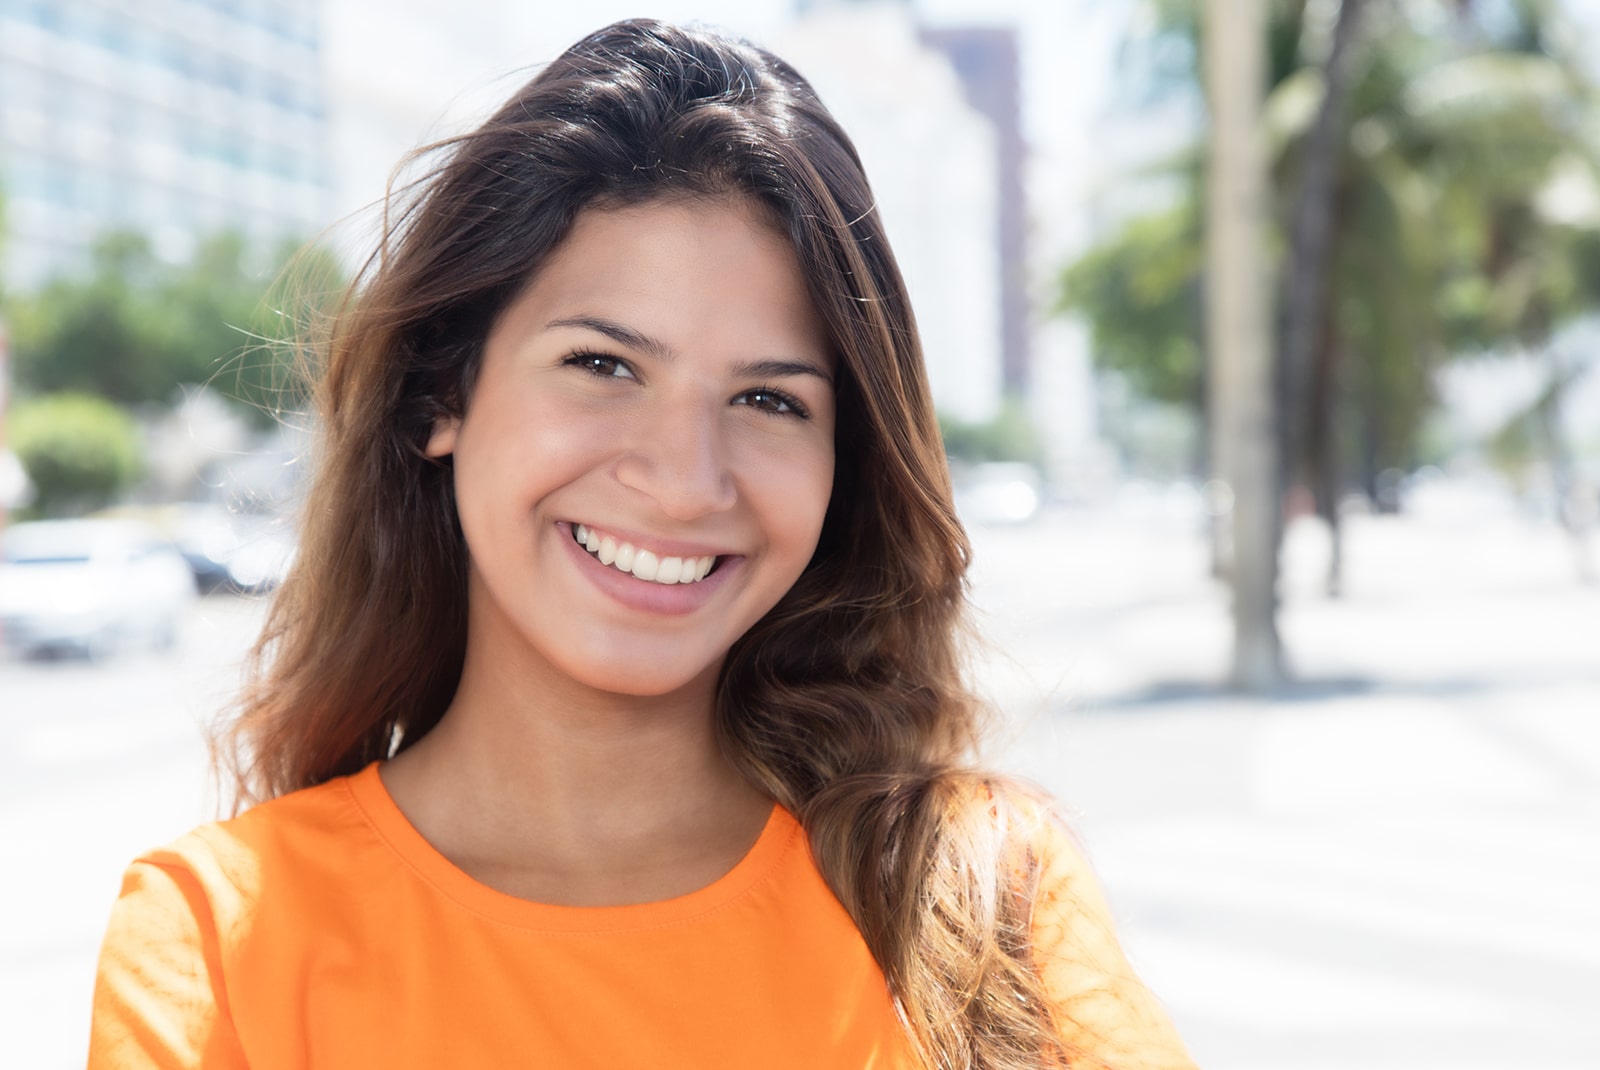 Beautiful caucasian woman in a orange shirt in the city